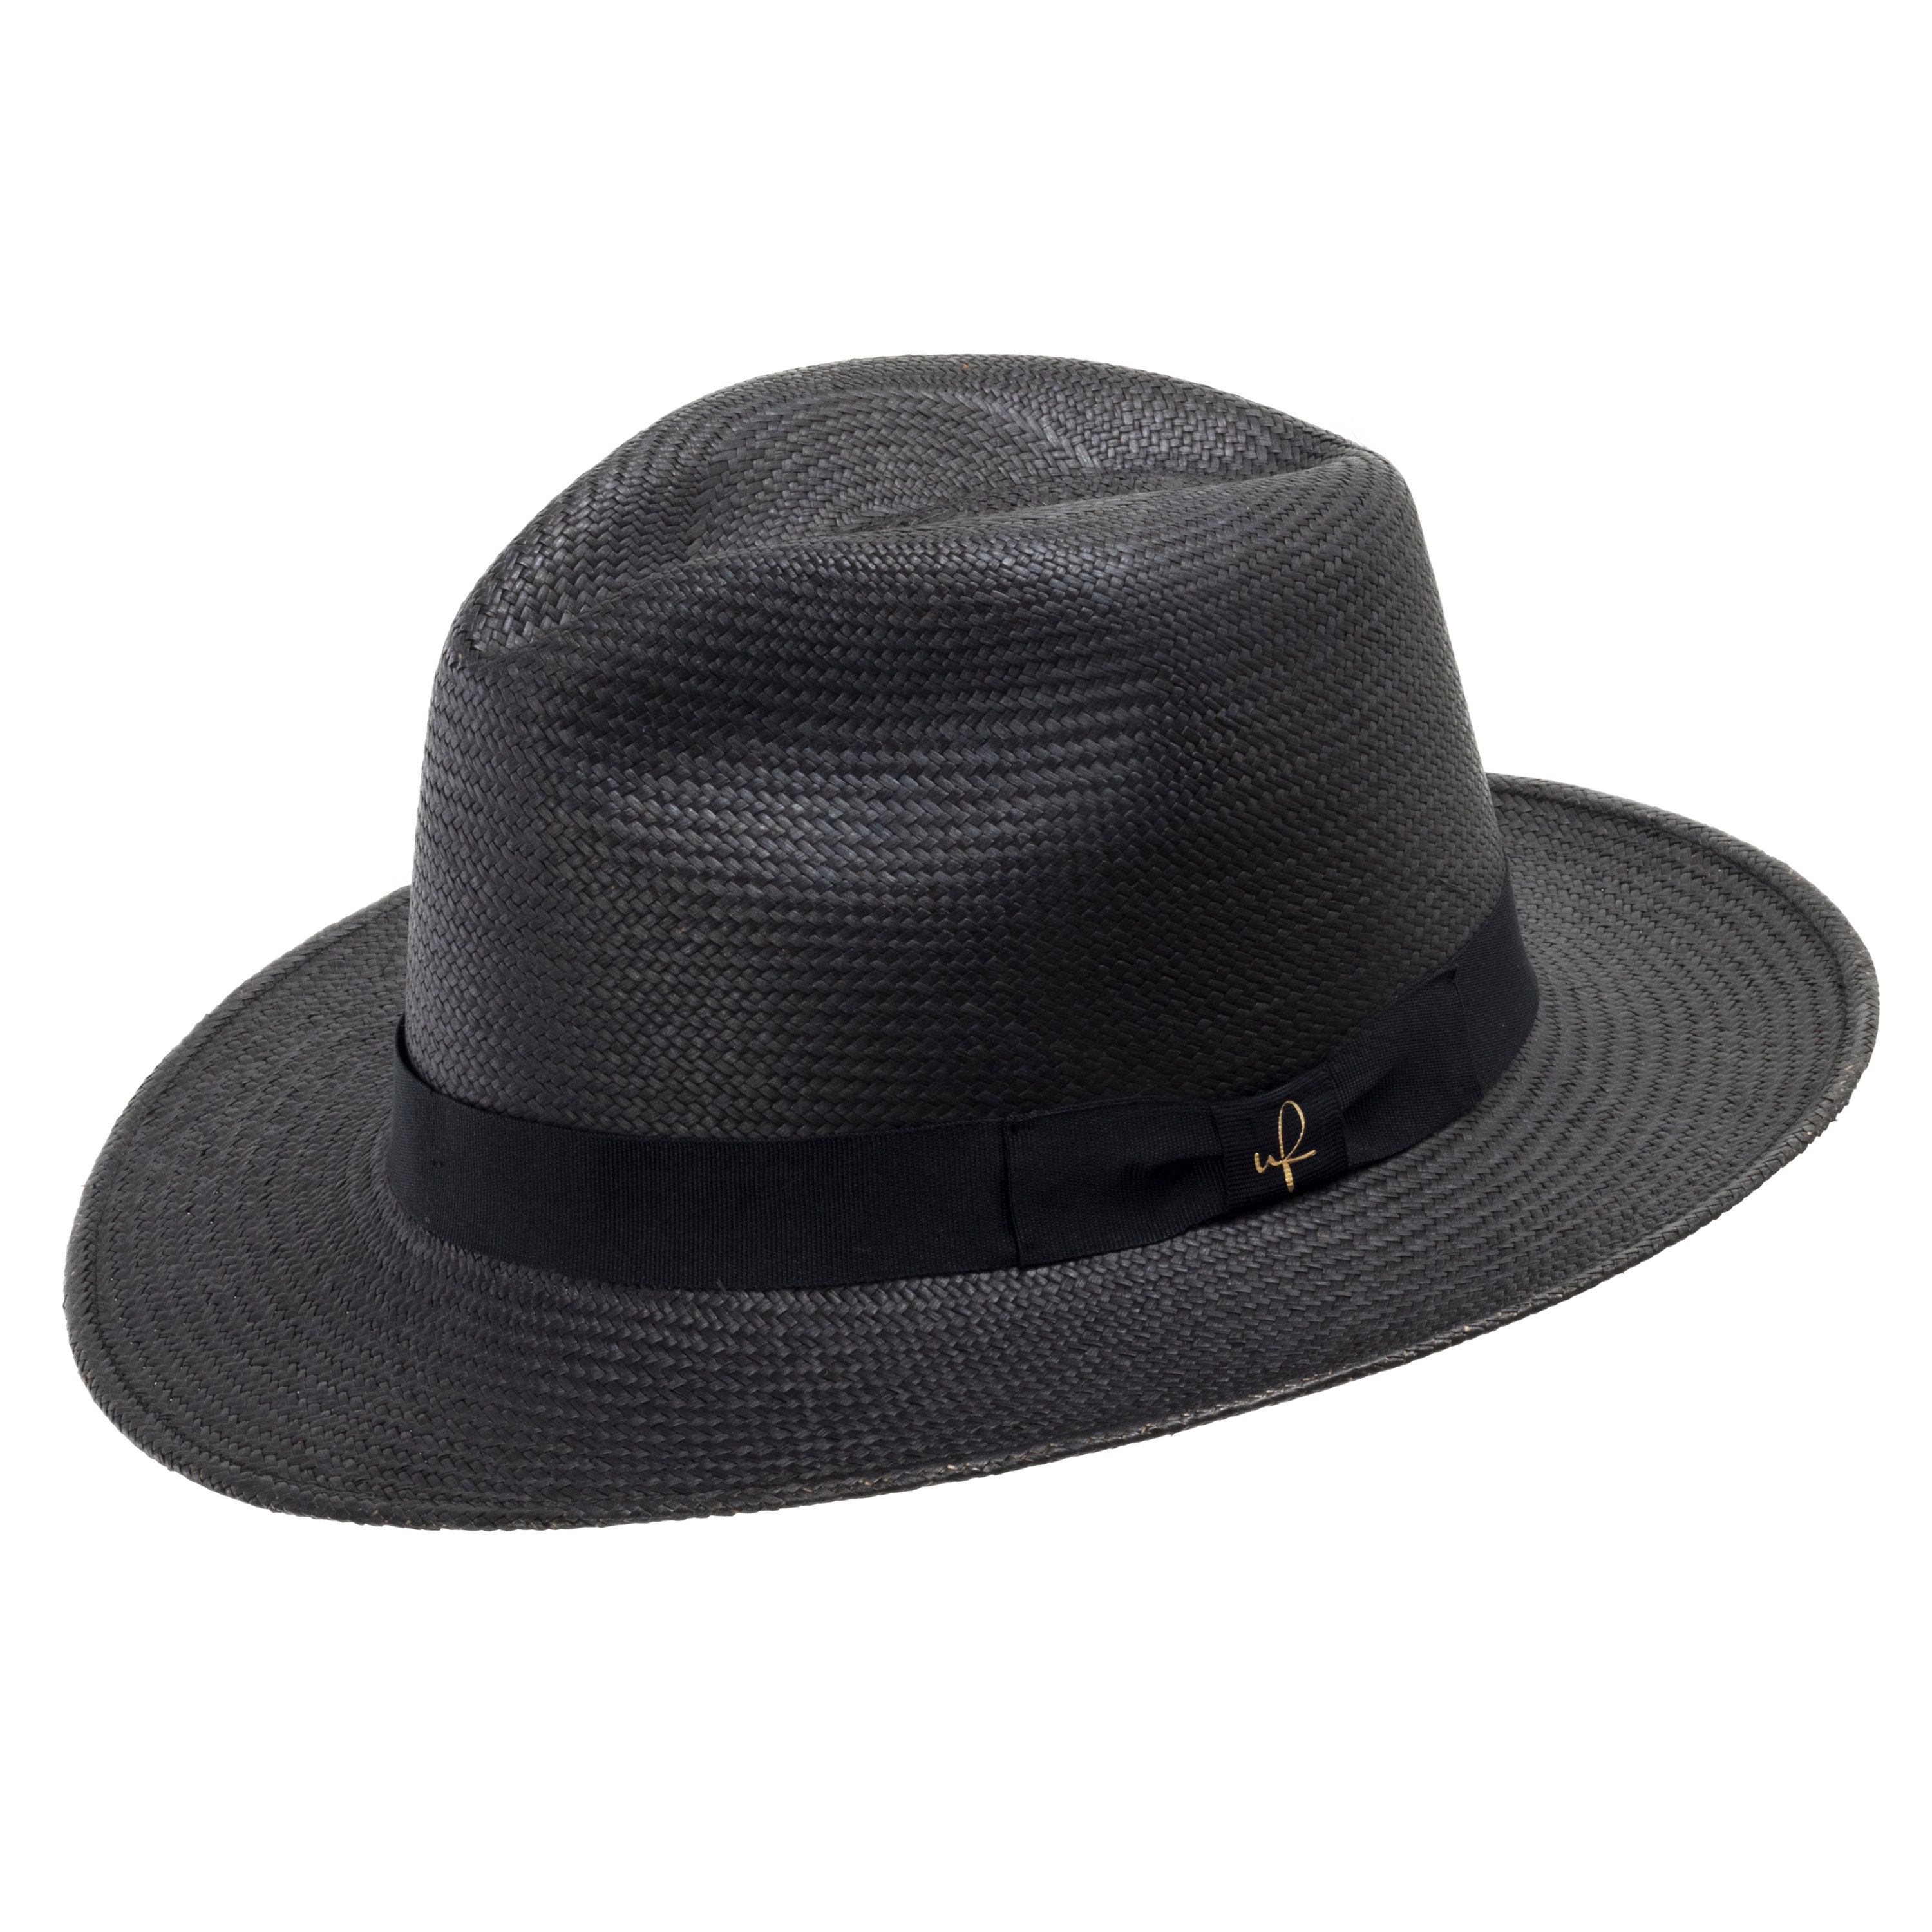 Ultrafino Bogart Adventurer Classic Straw Panama Hat Exotic Feather 